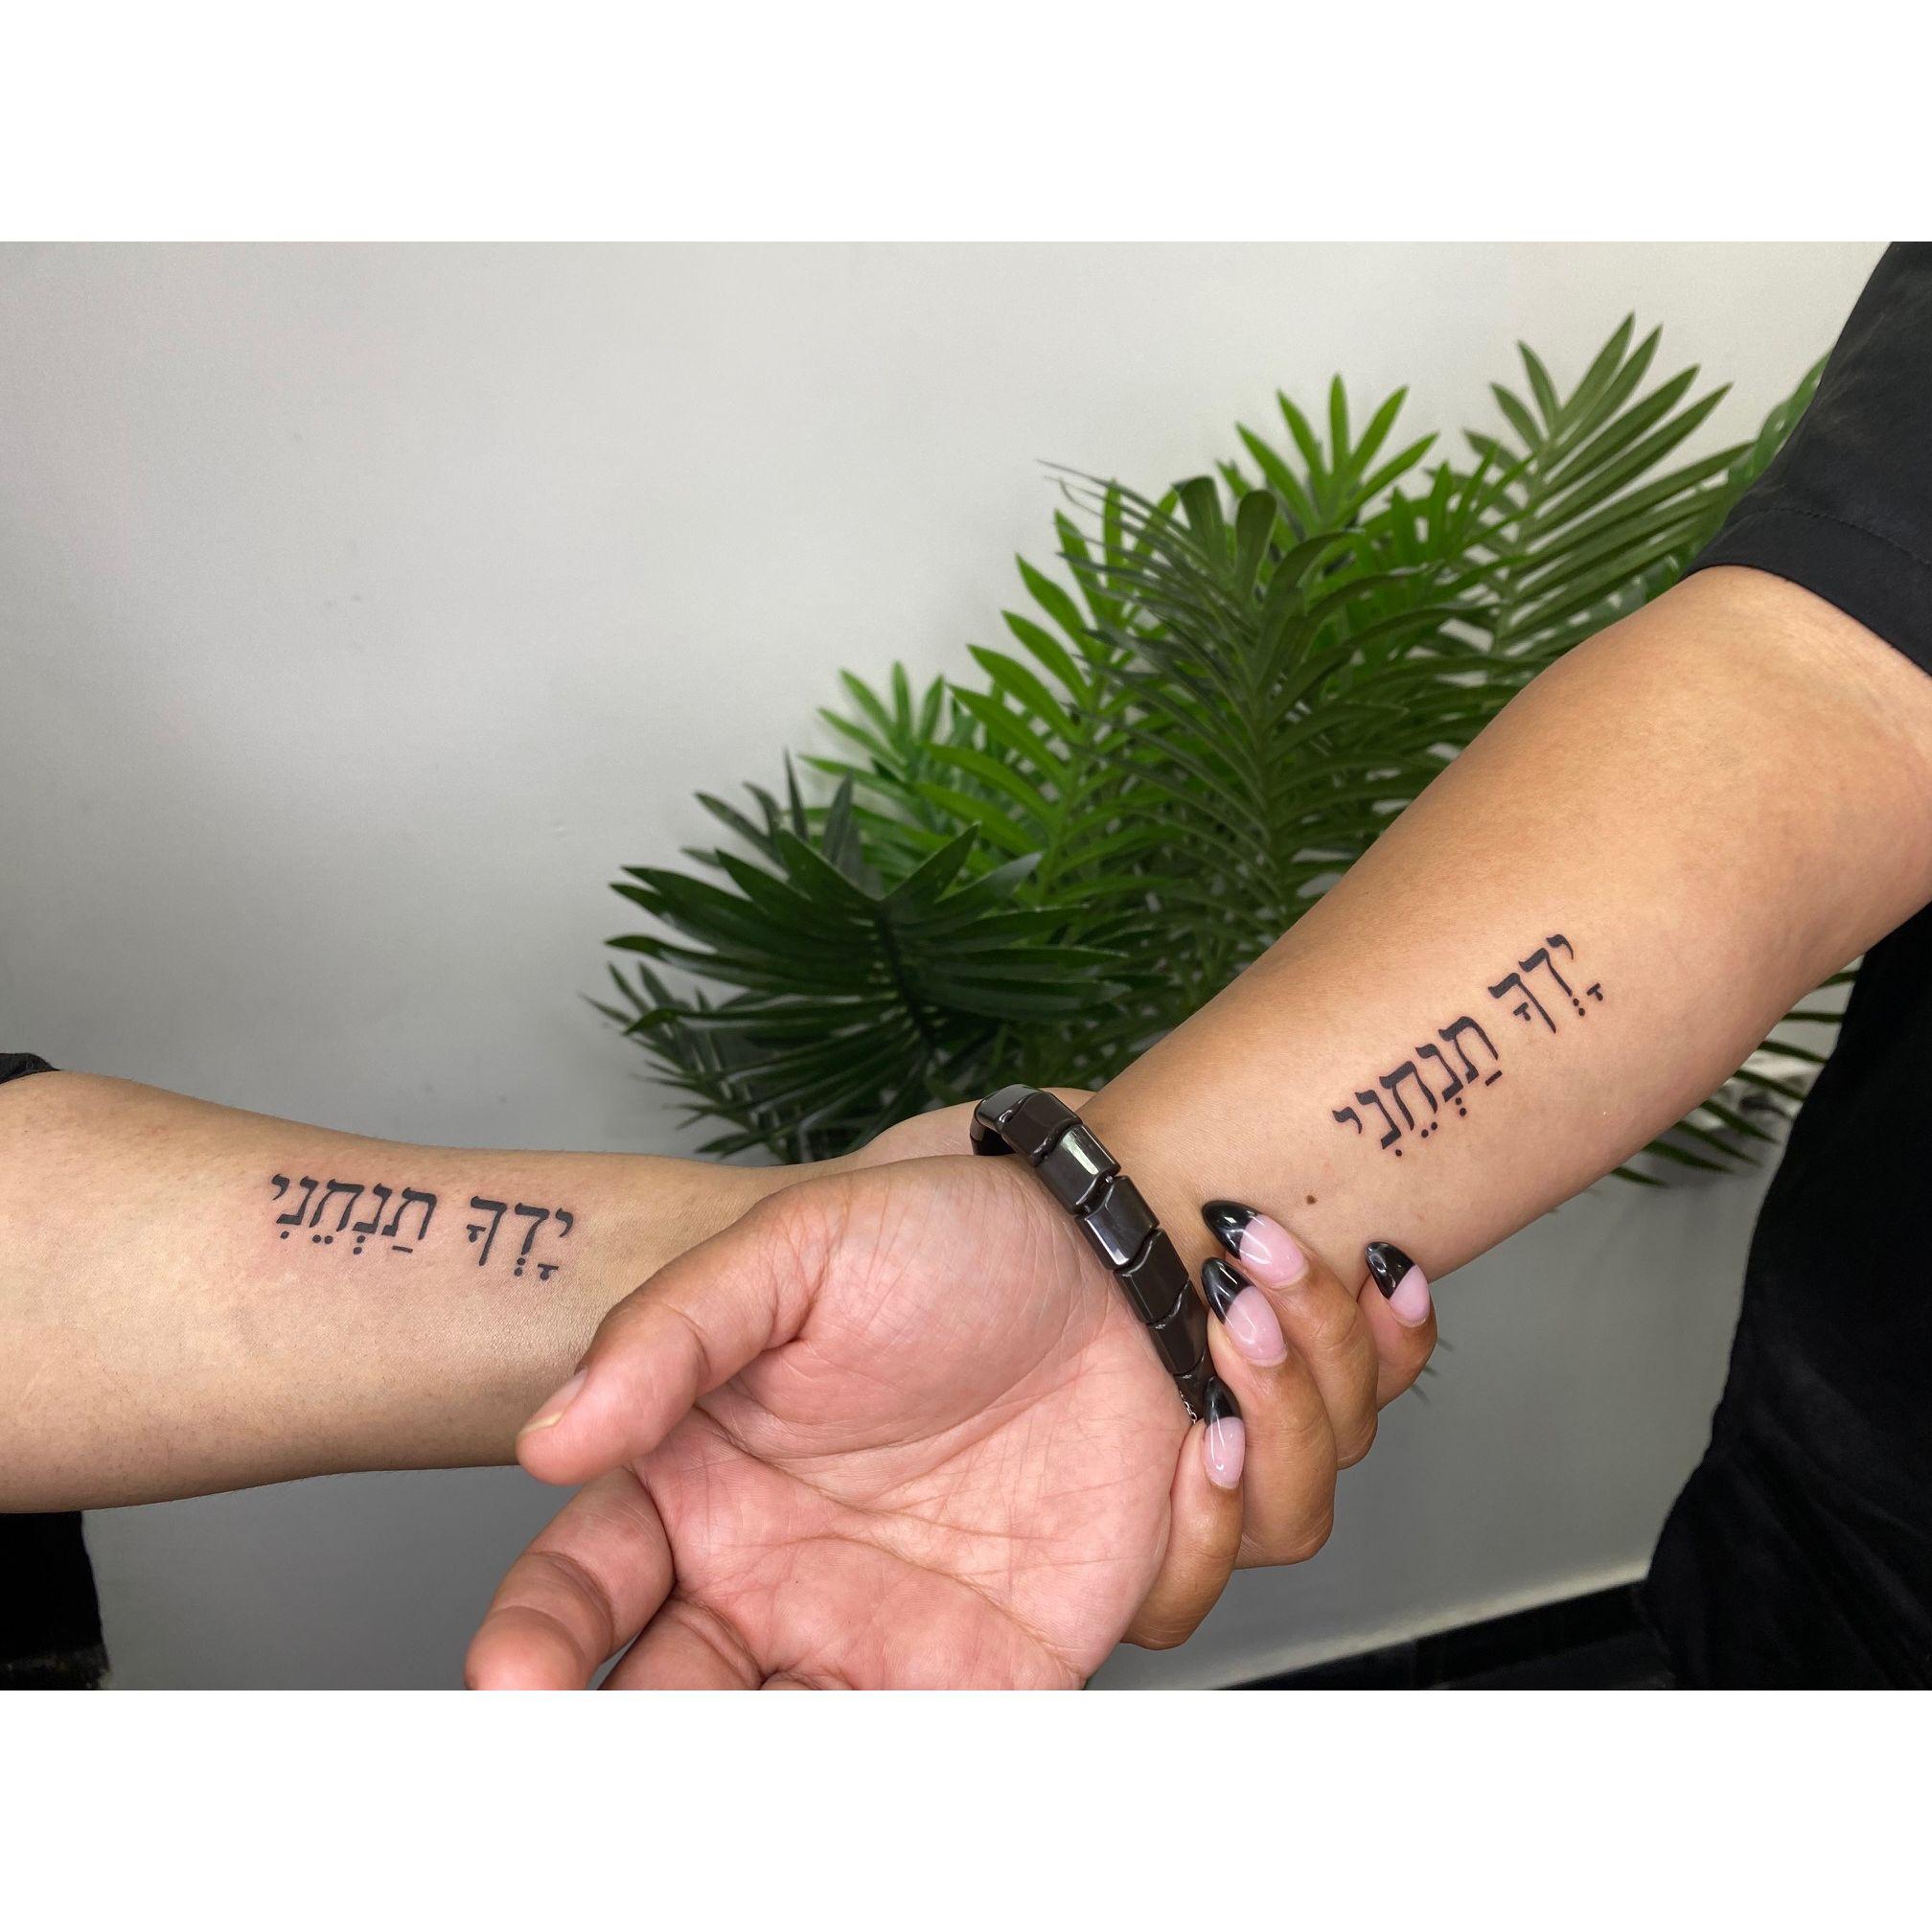 Matching tattoo in Israel